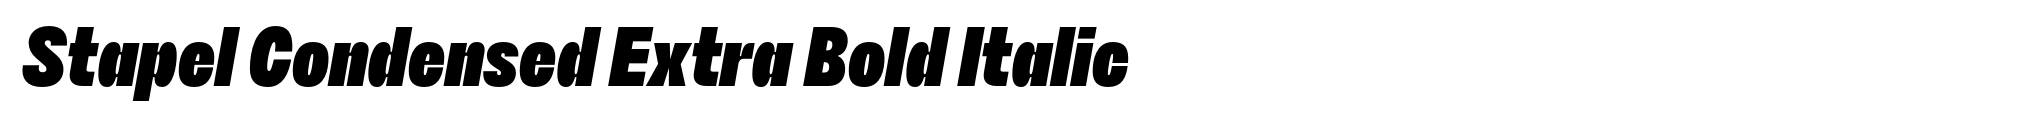 Stapel Condensed Extra Bold Italic image